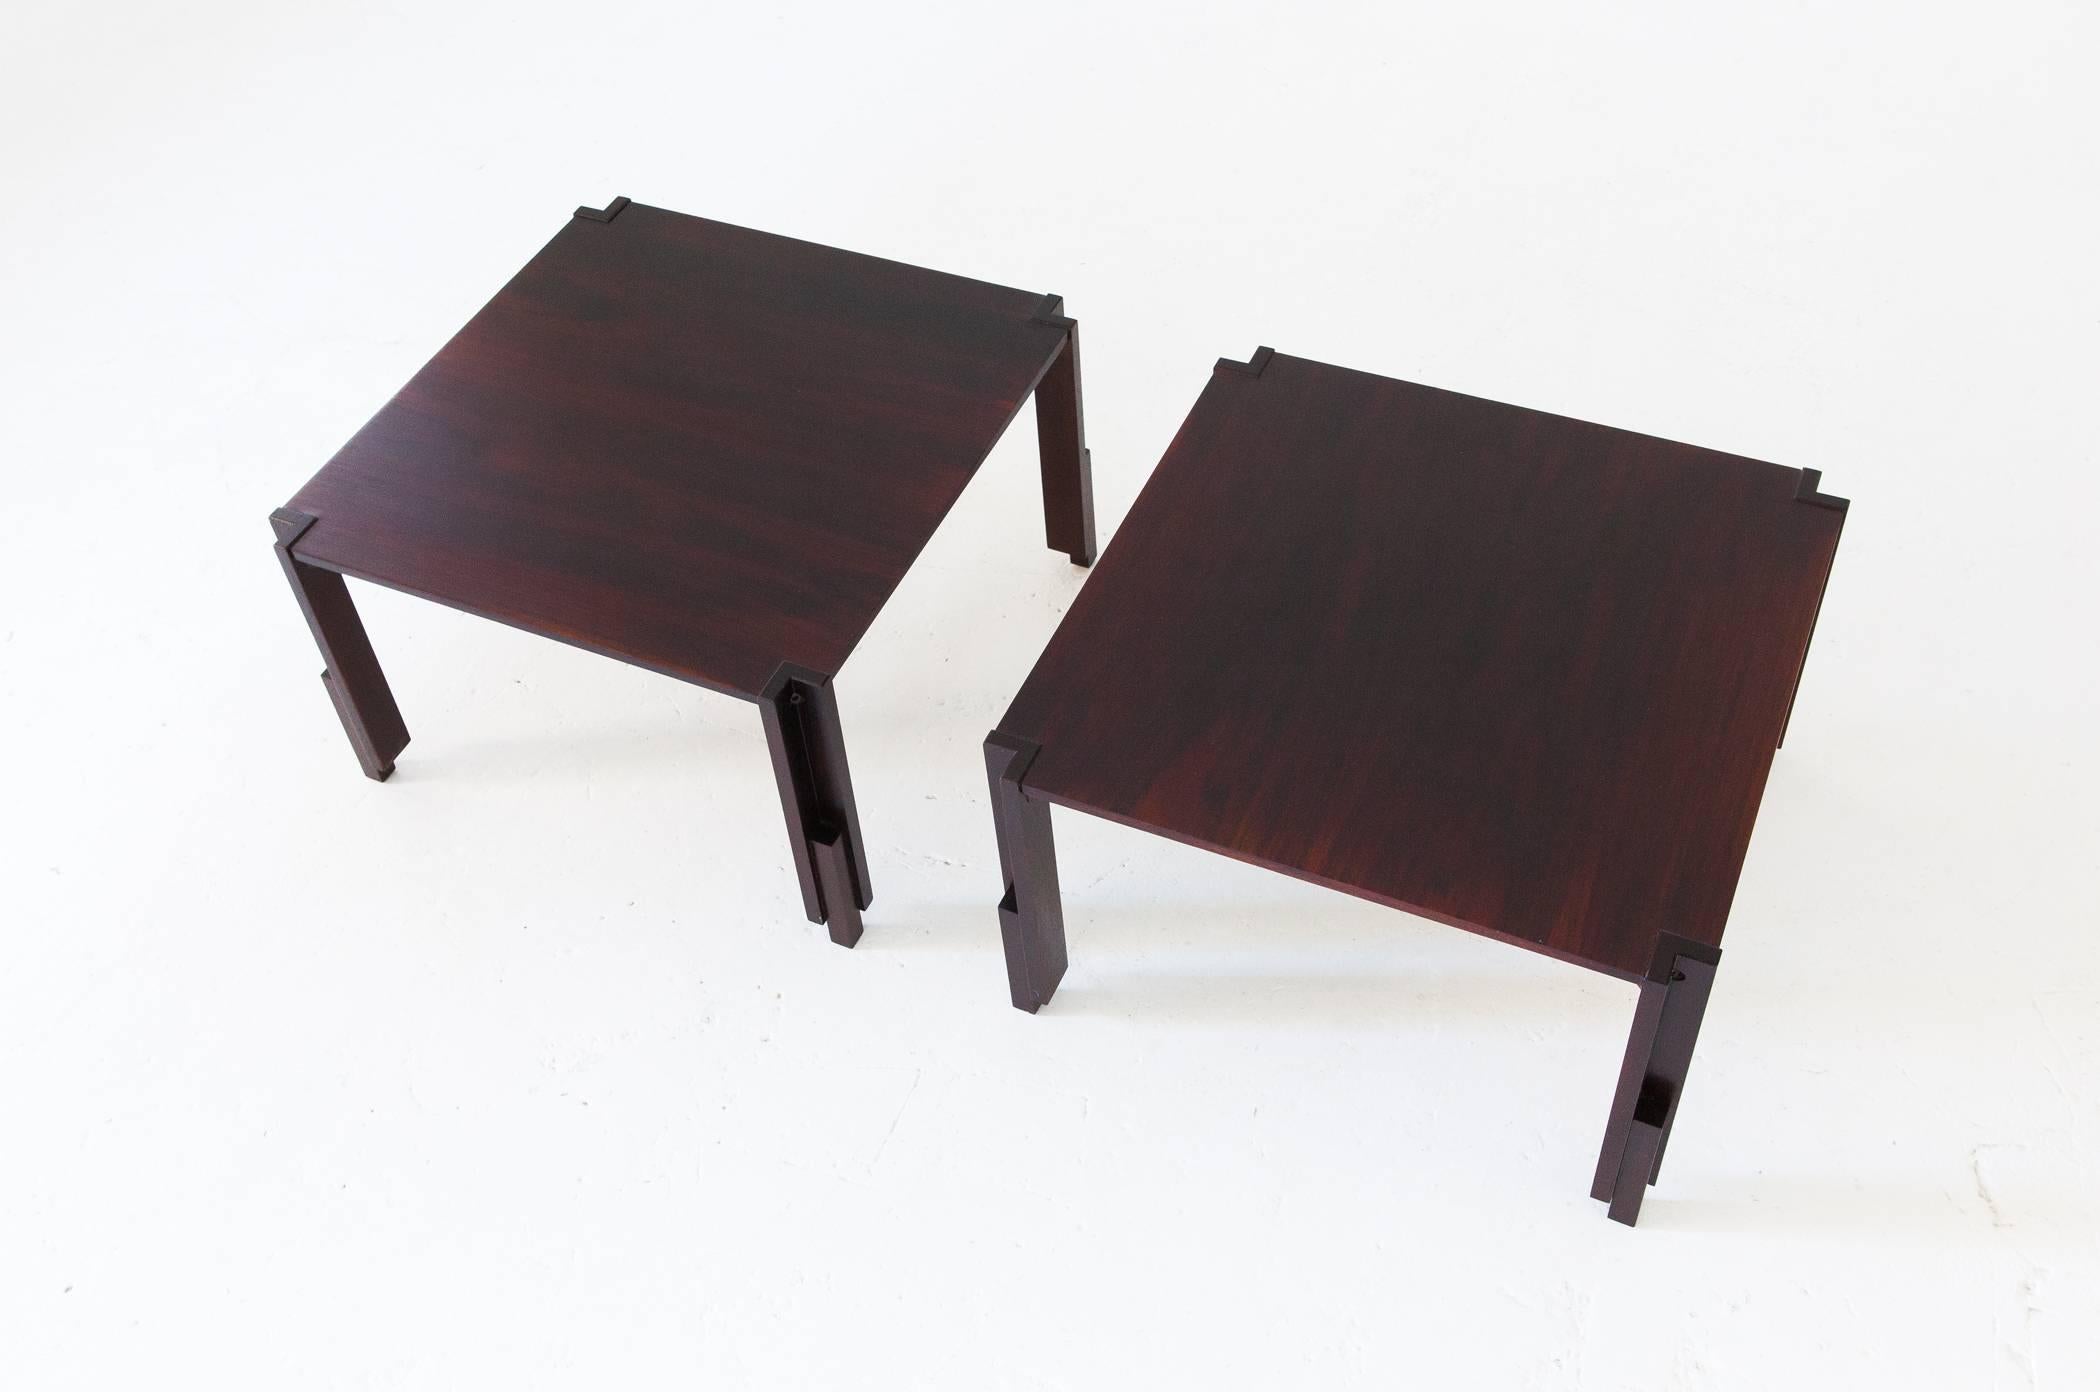 Wood Two Italian Mid-Century Modern Coffee Tables Stildomus Attributed